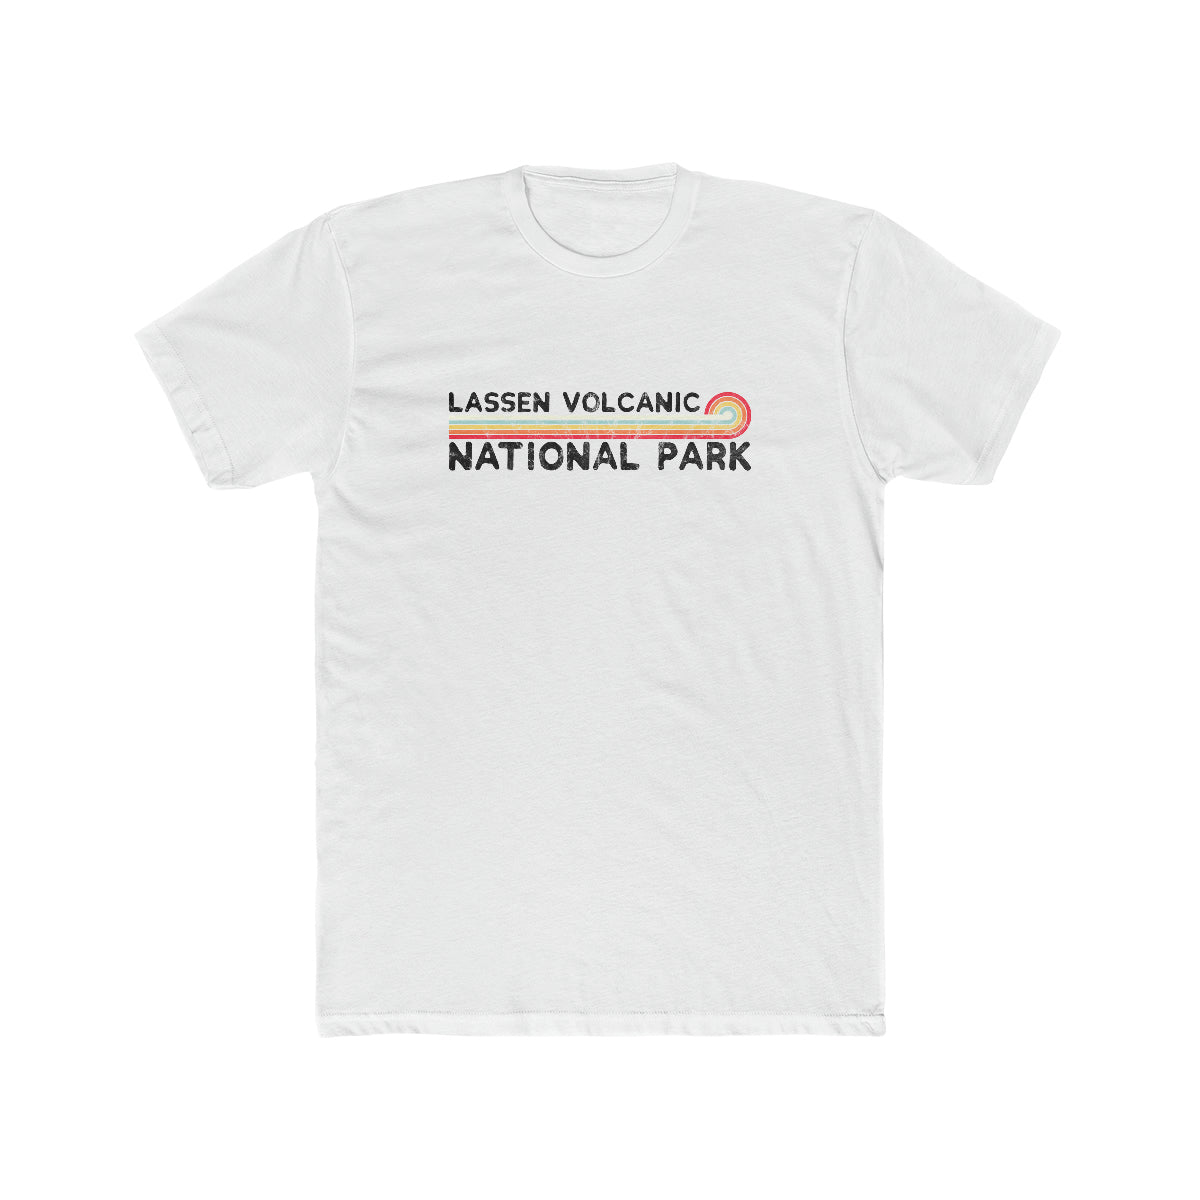 Lassen Volcanic National Park T-Shirt - Vintage Stretched Sunrise